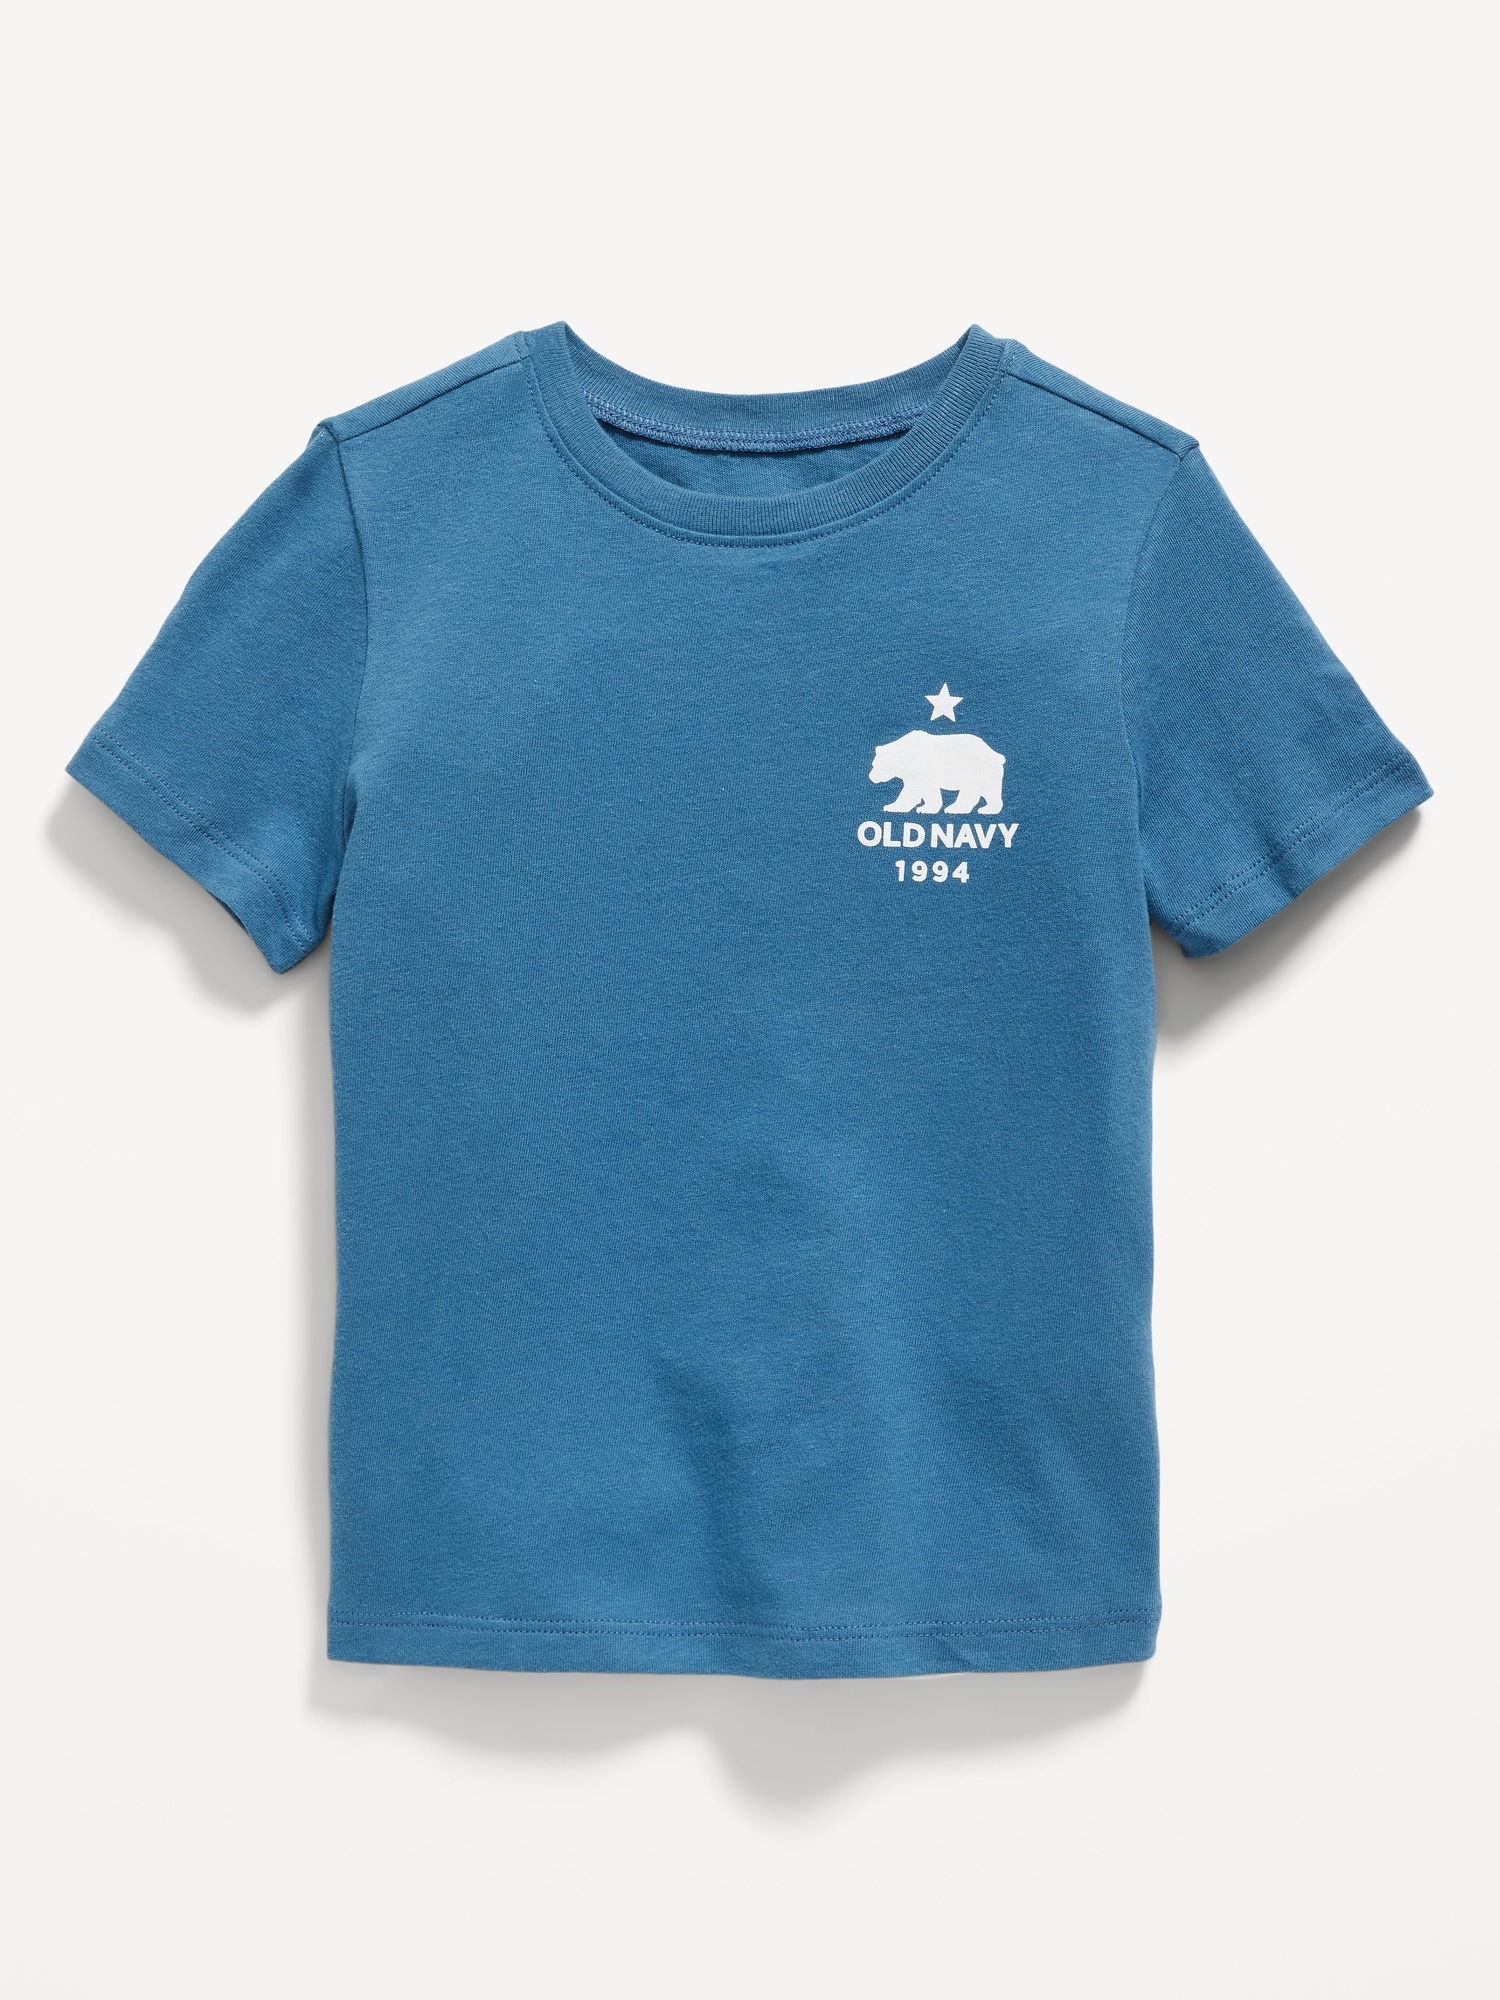 Unisex Logo Graphic T-Shirt for Toddler